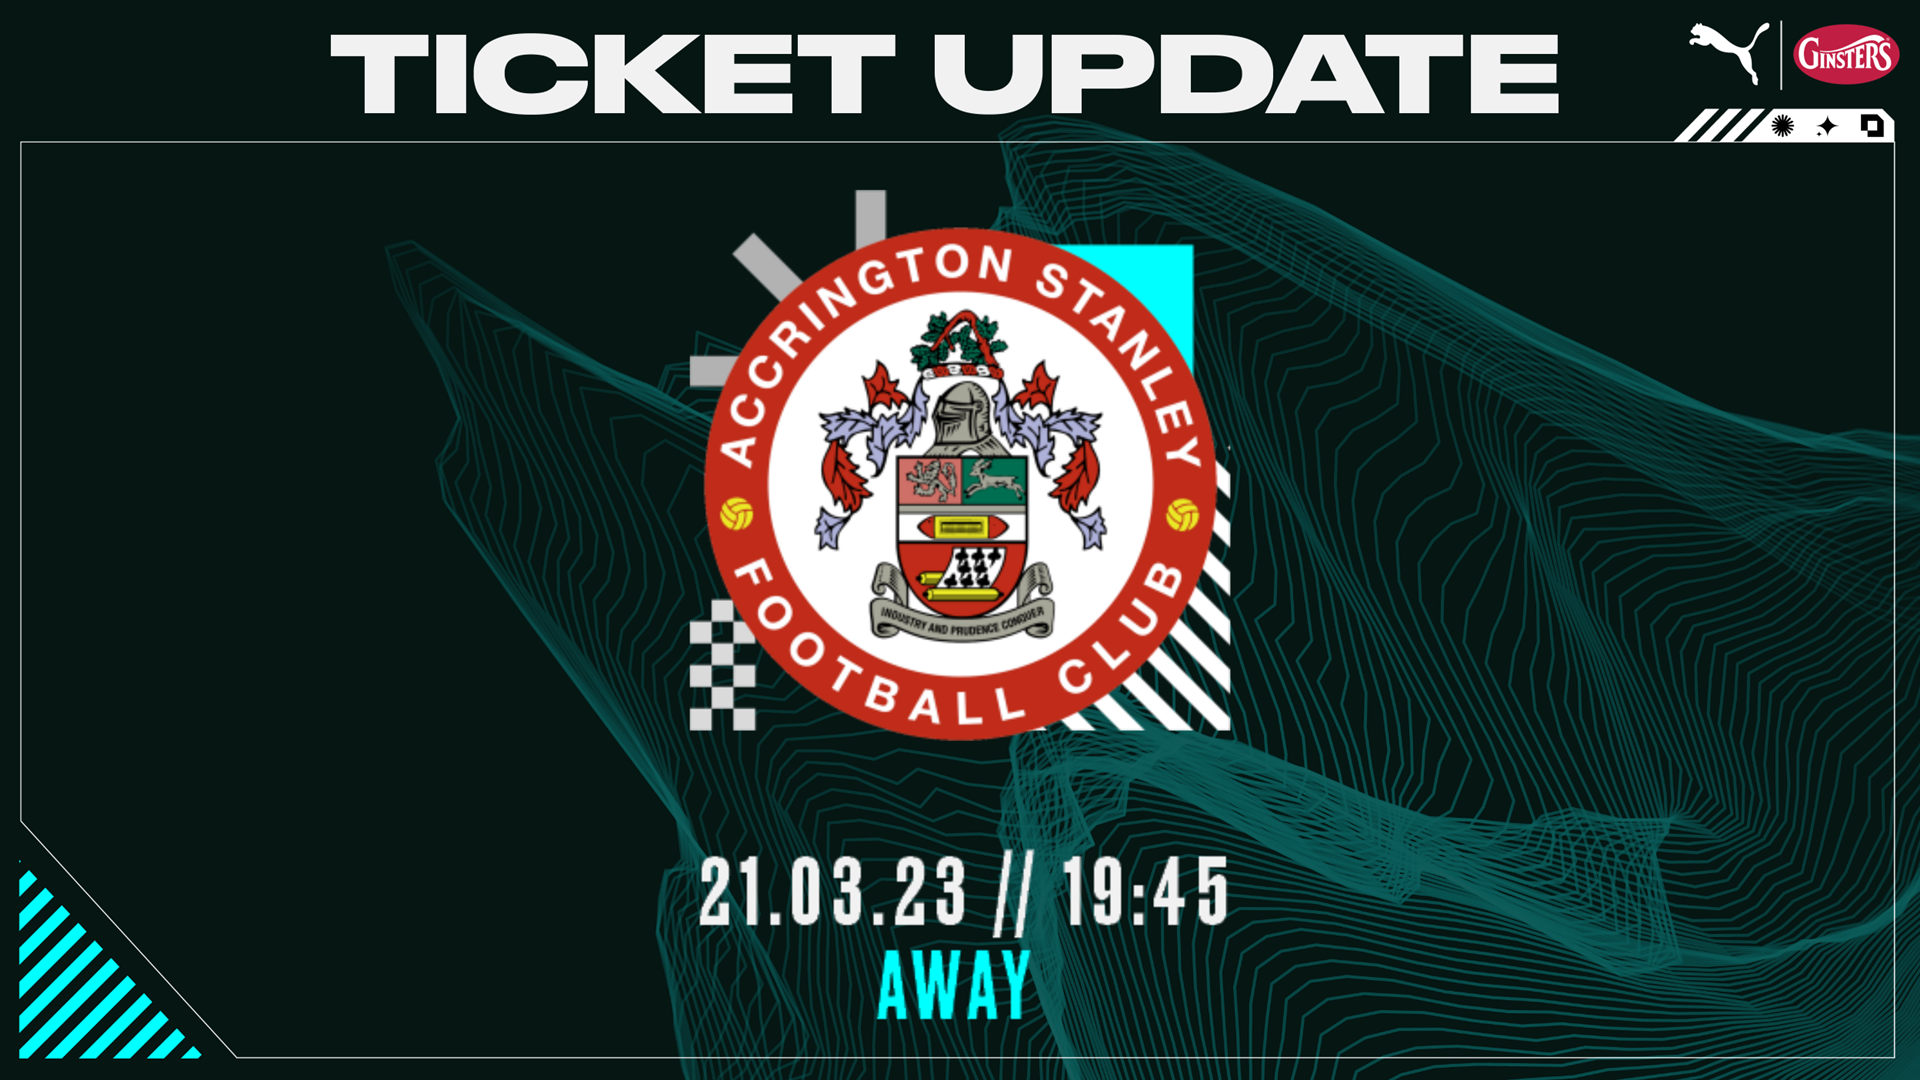 Accrington Tickets Update